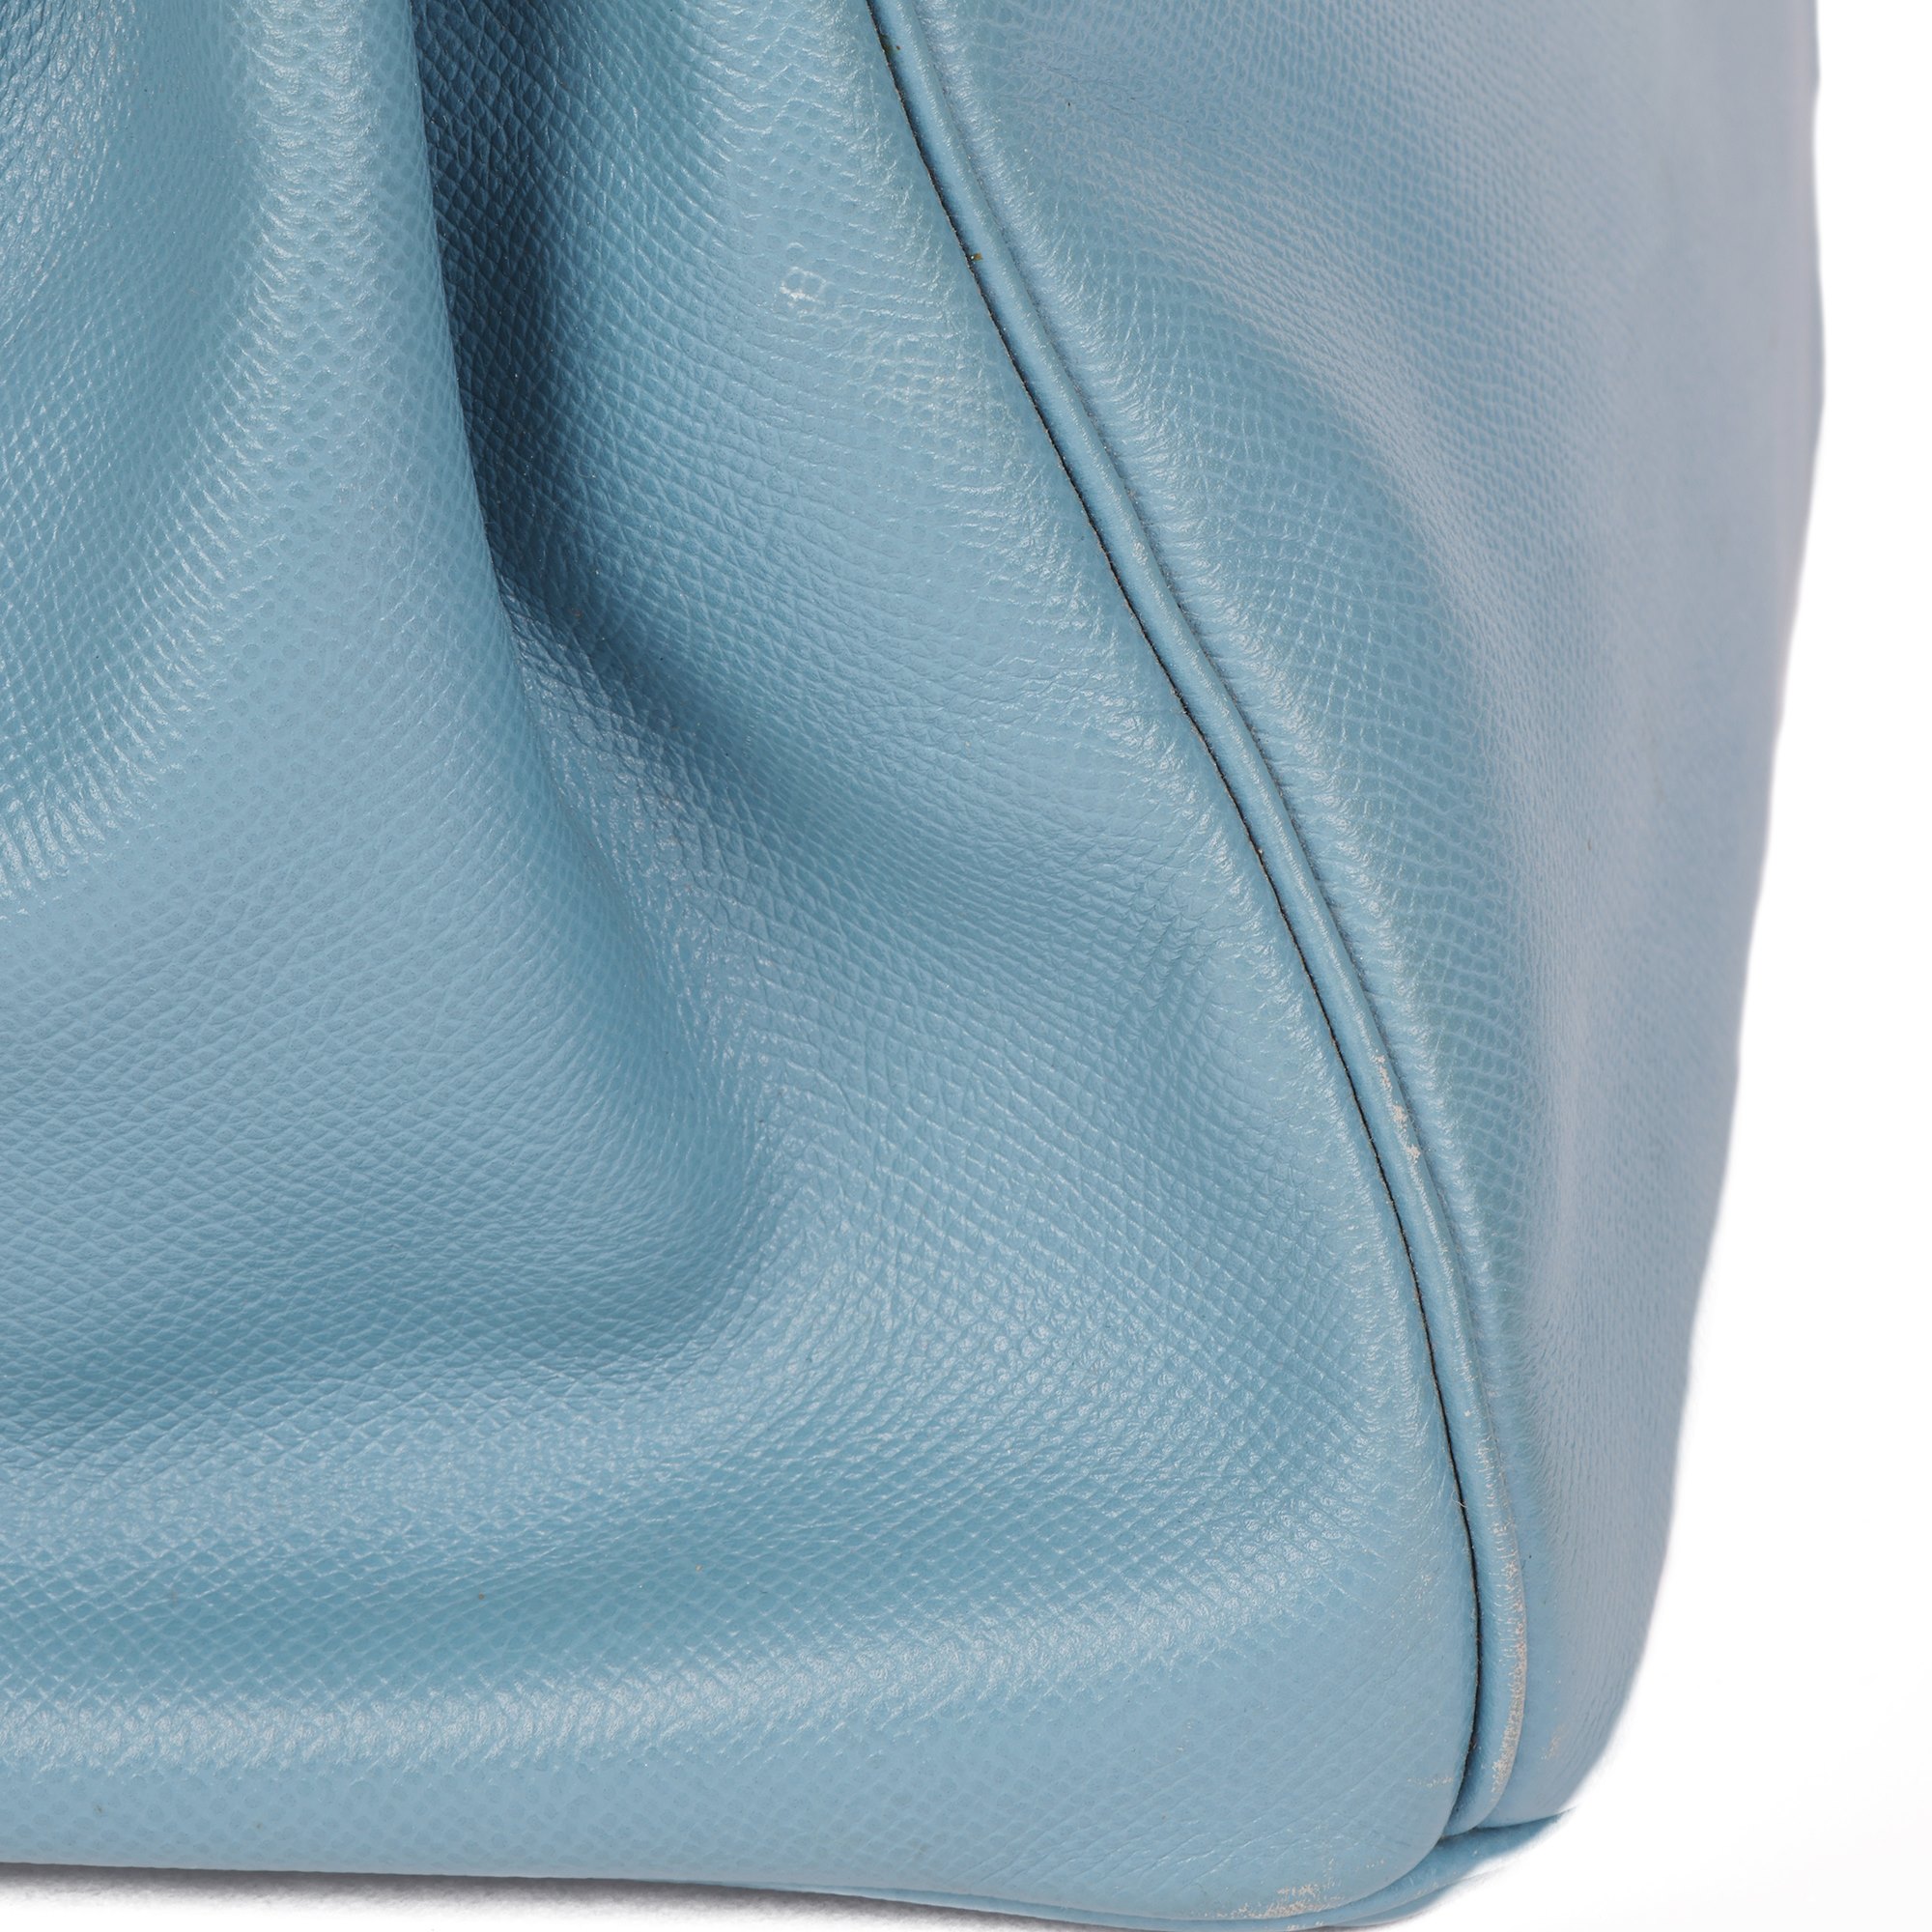 Hermès Blue Jean Epsom Leather Birkin 35cm Retourne